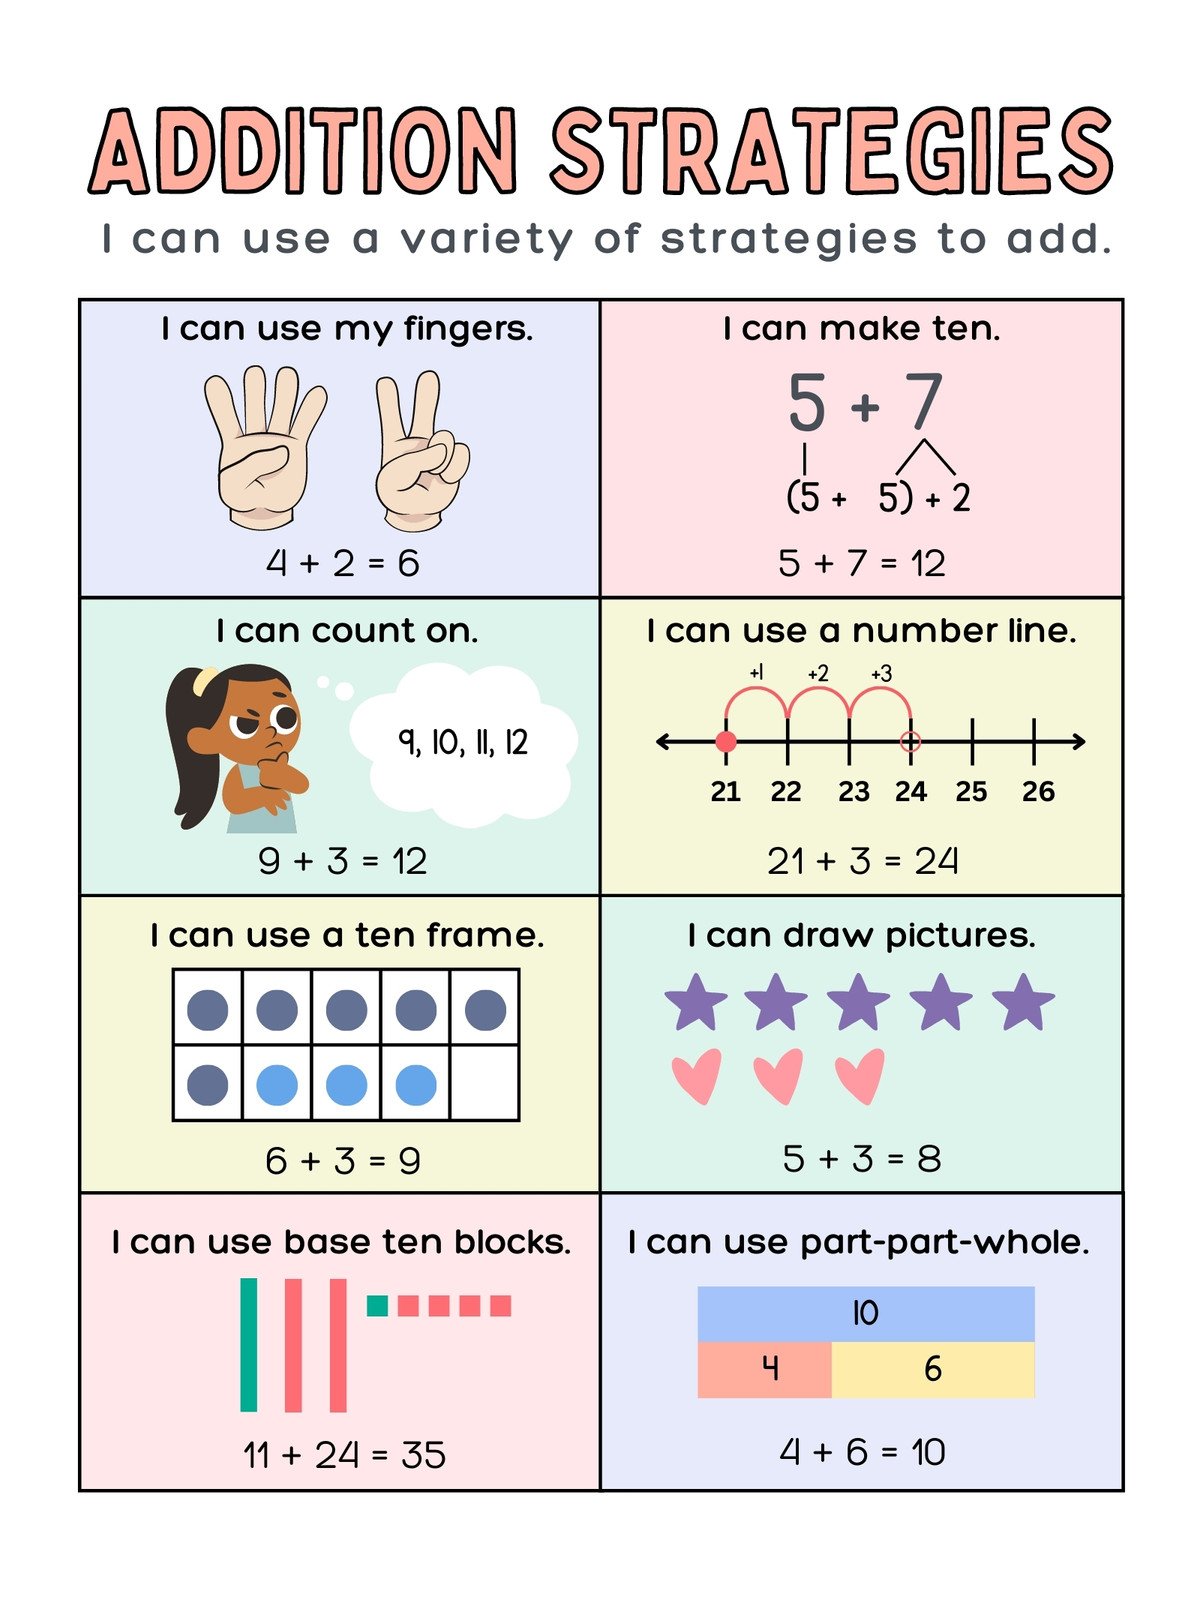 Free Printable, Customizable Math Poster Templates | Canva